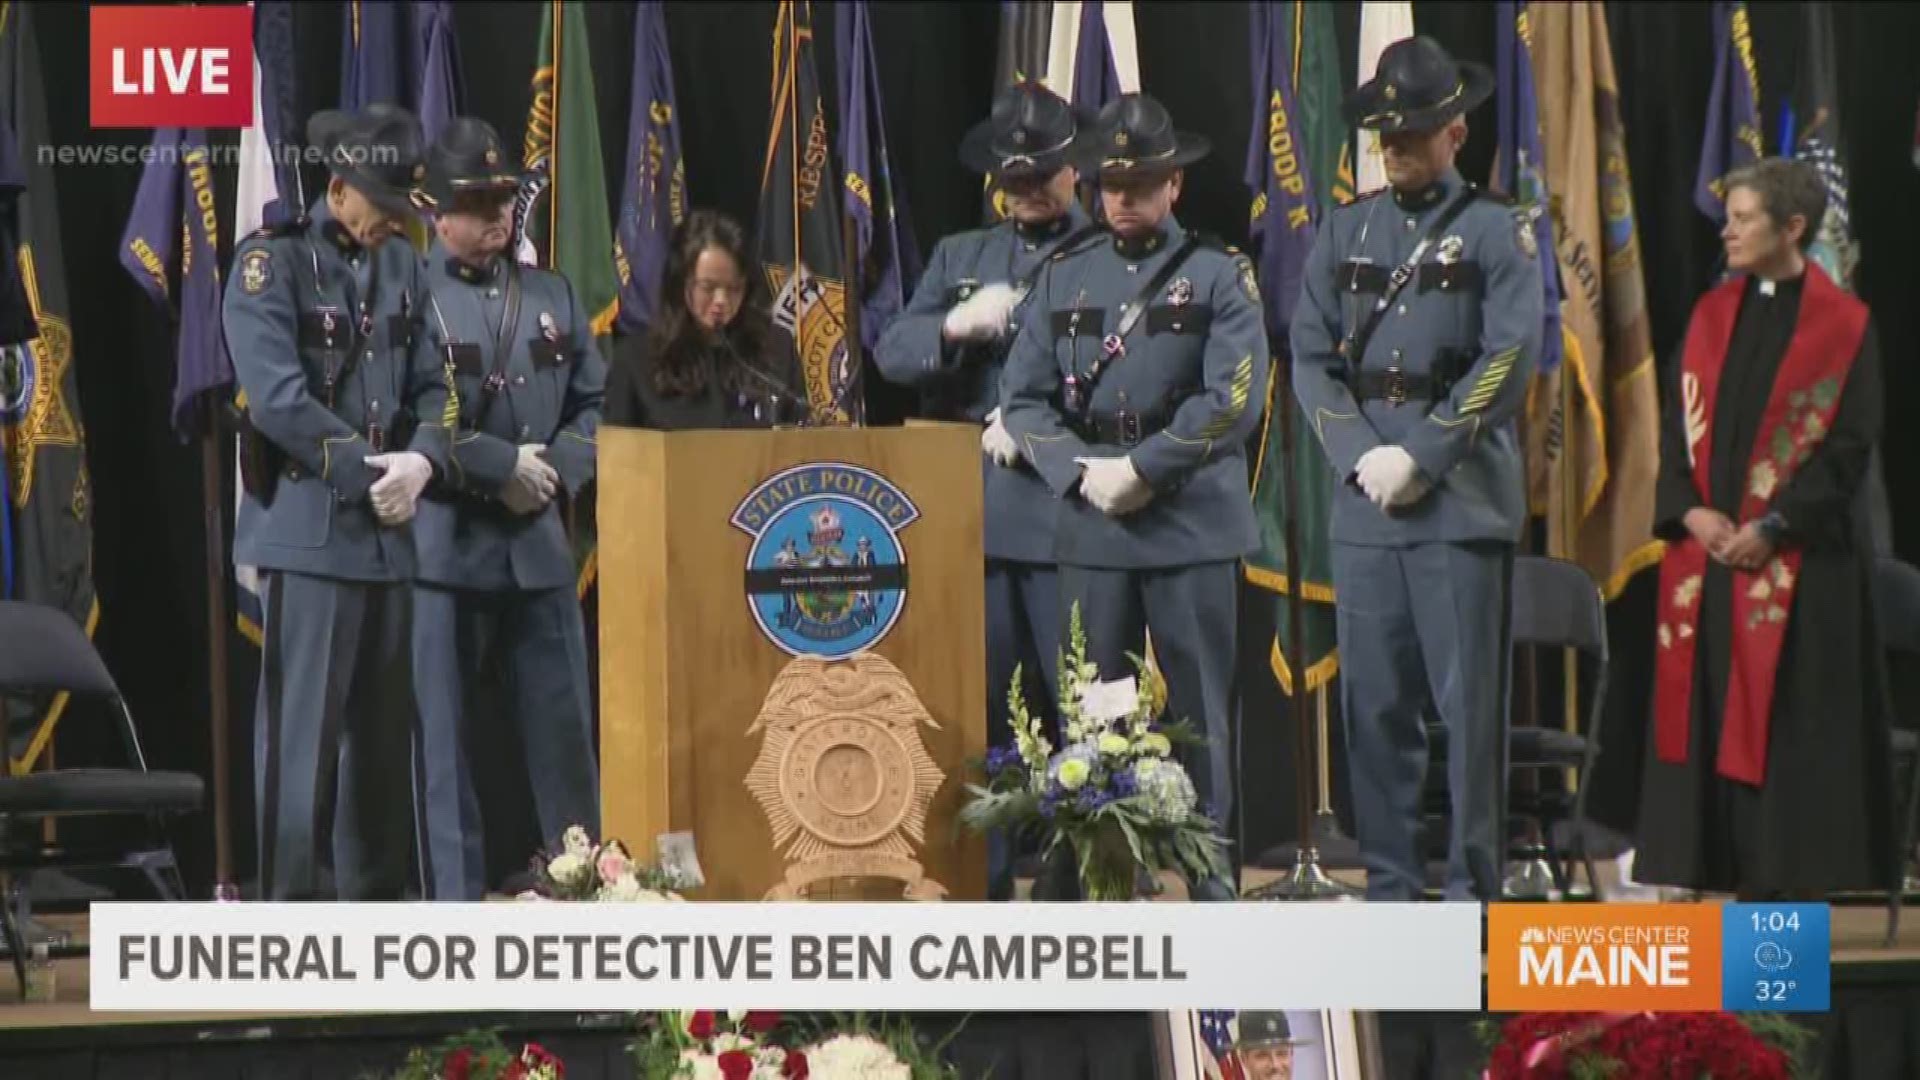 Hilary Campbell, wife of fallen Maine Detective Ben Campbell, gave an emotional speech during her husband's service